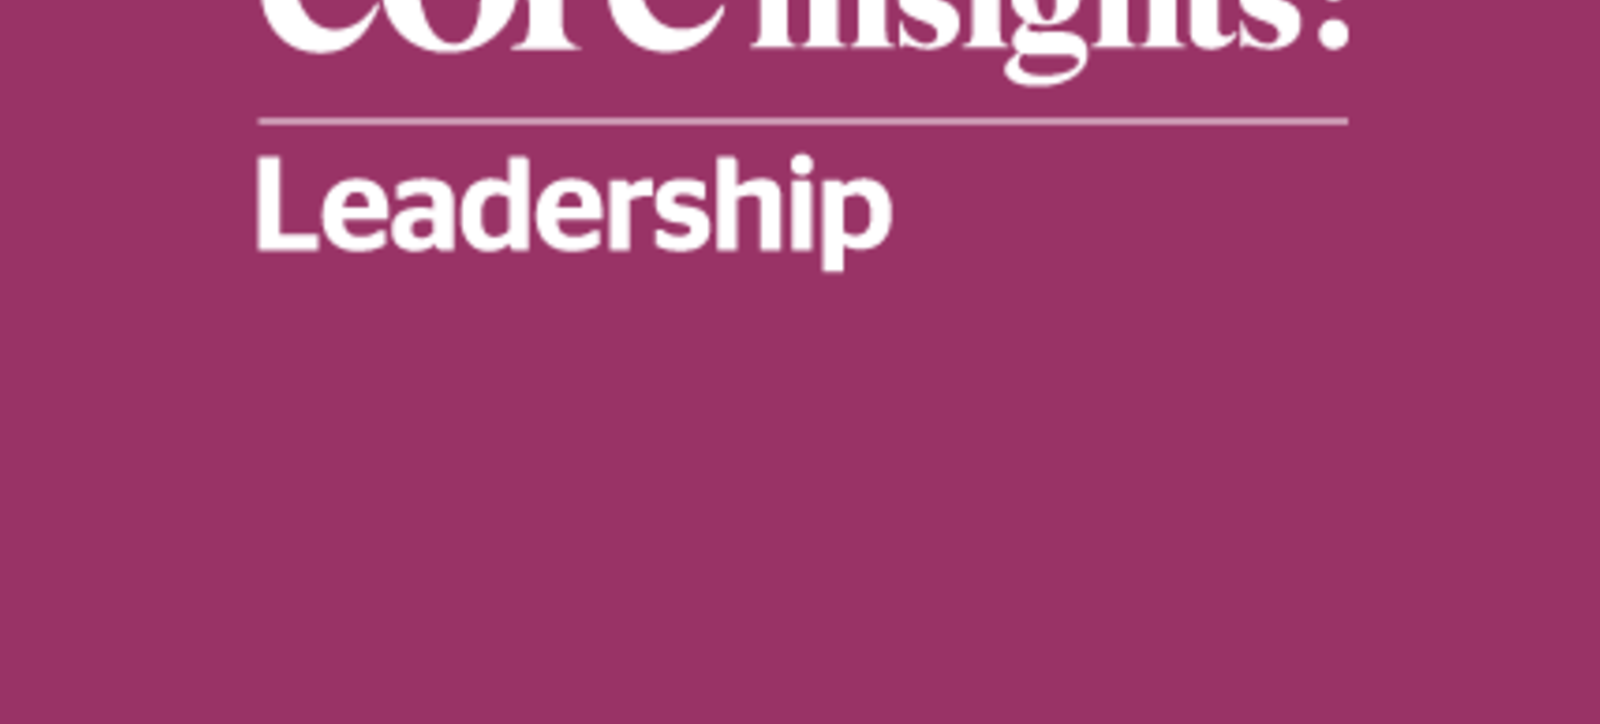 Core insights leadership